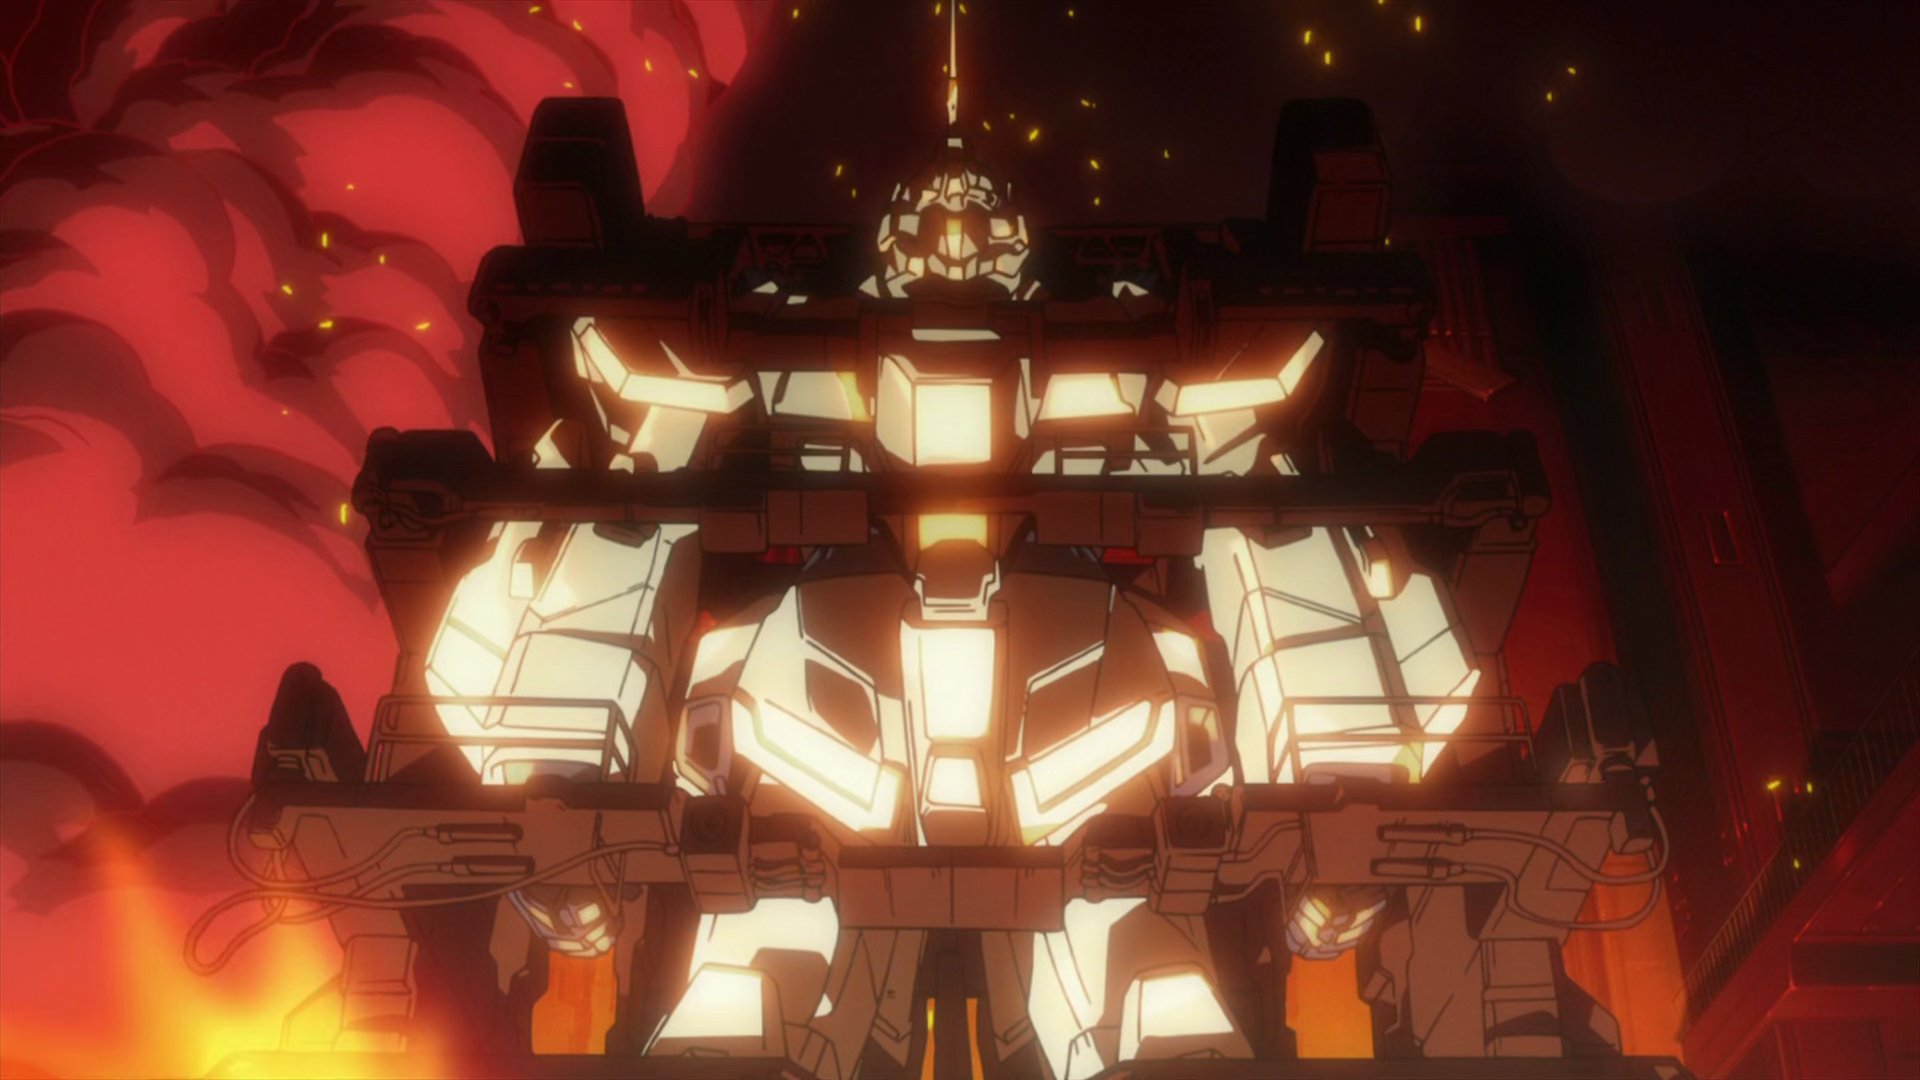 Gundam Mobile Suit Gundam Unicorn Space Anime Screenshot Anime Mechs Smoke 1920x1080